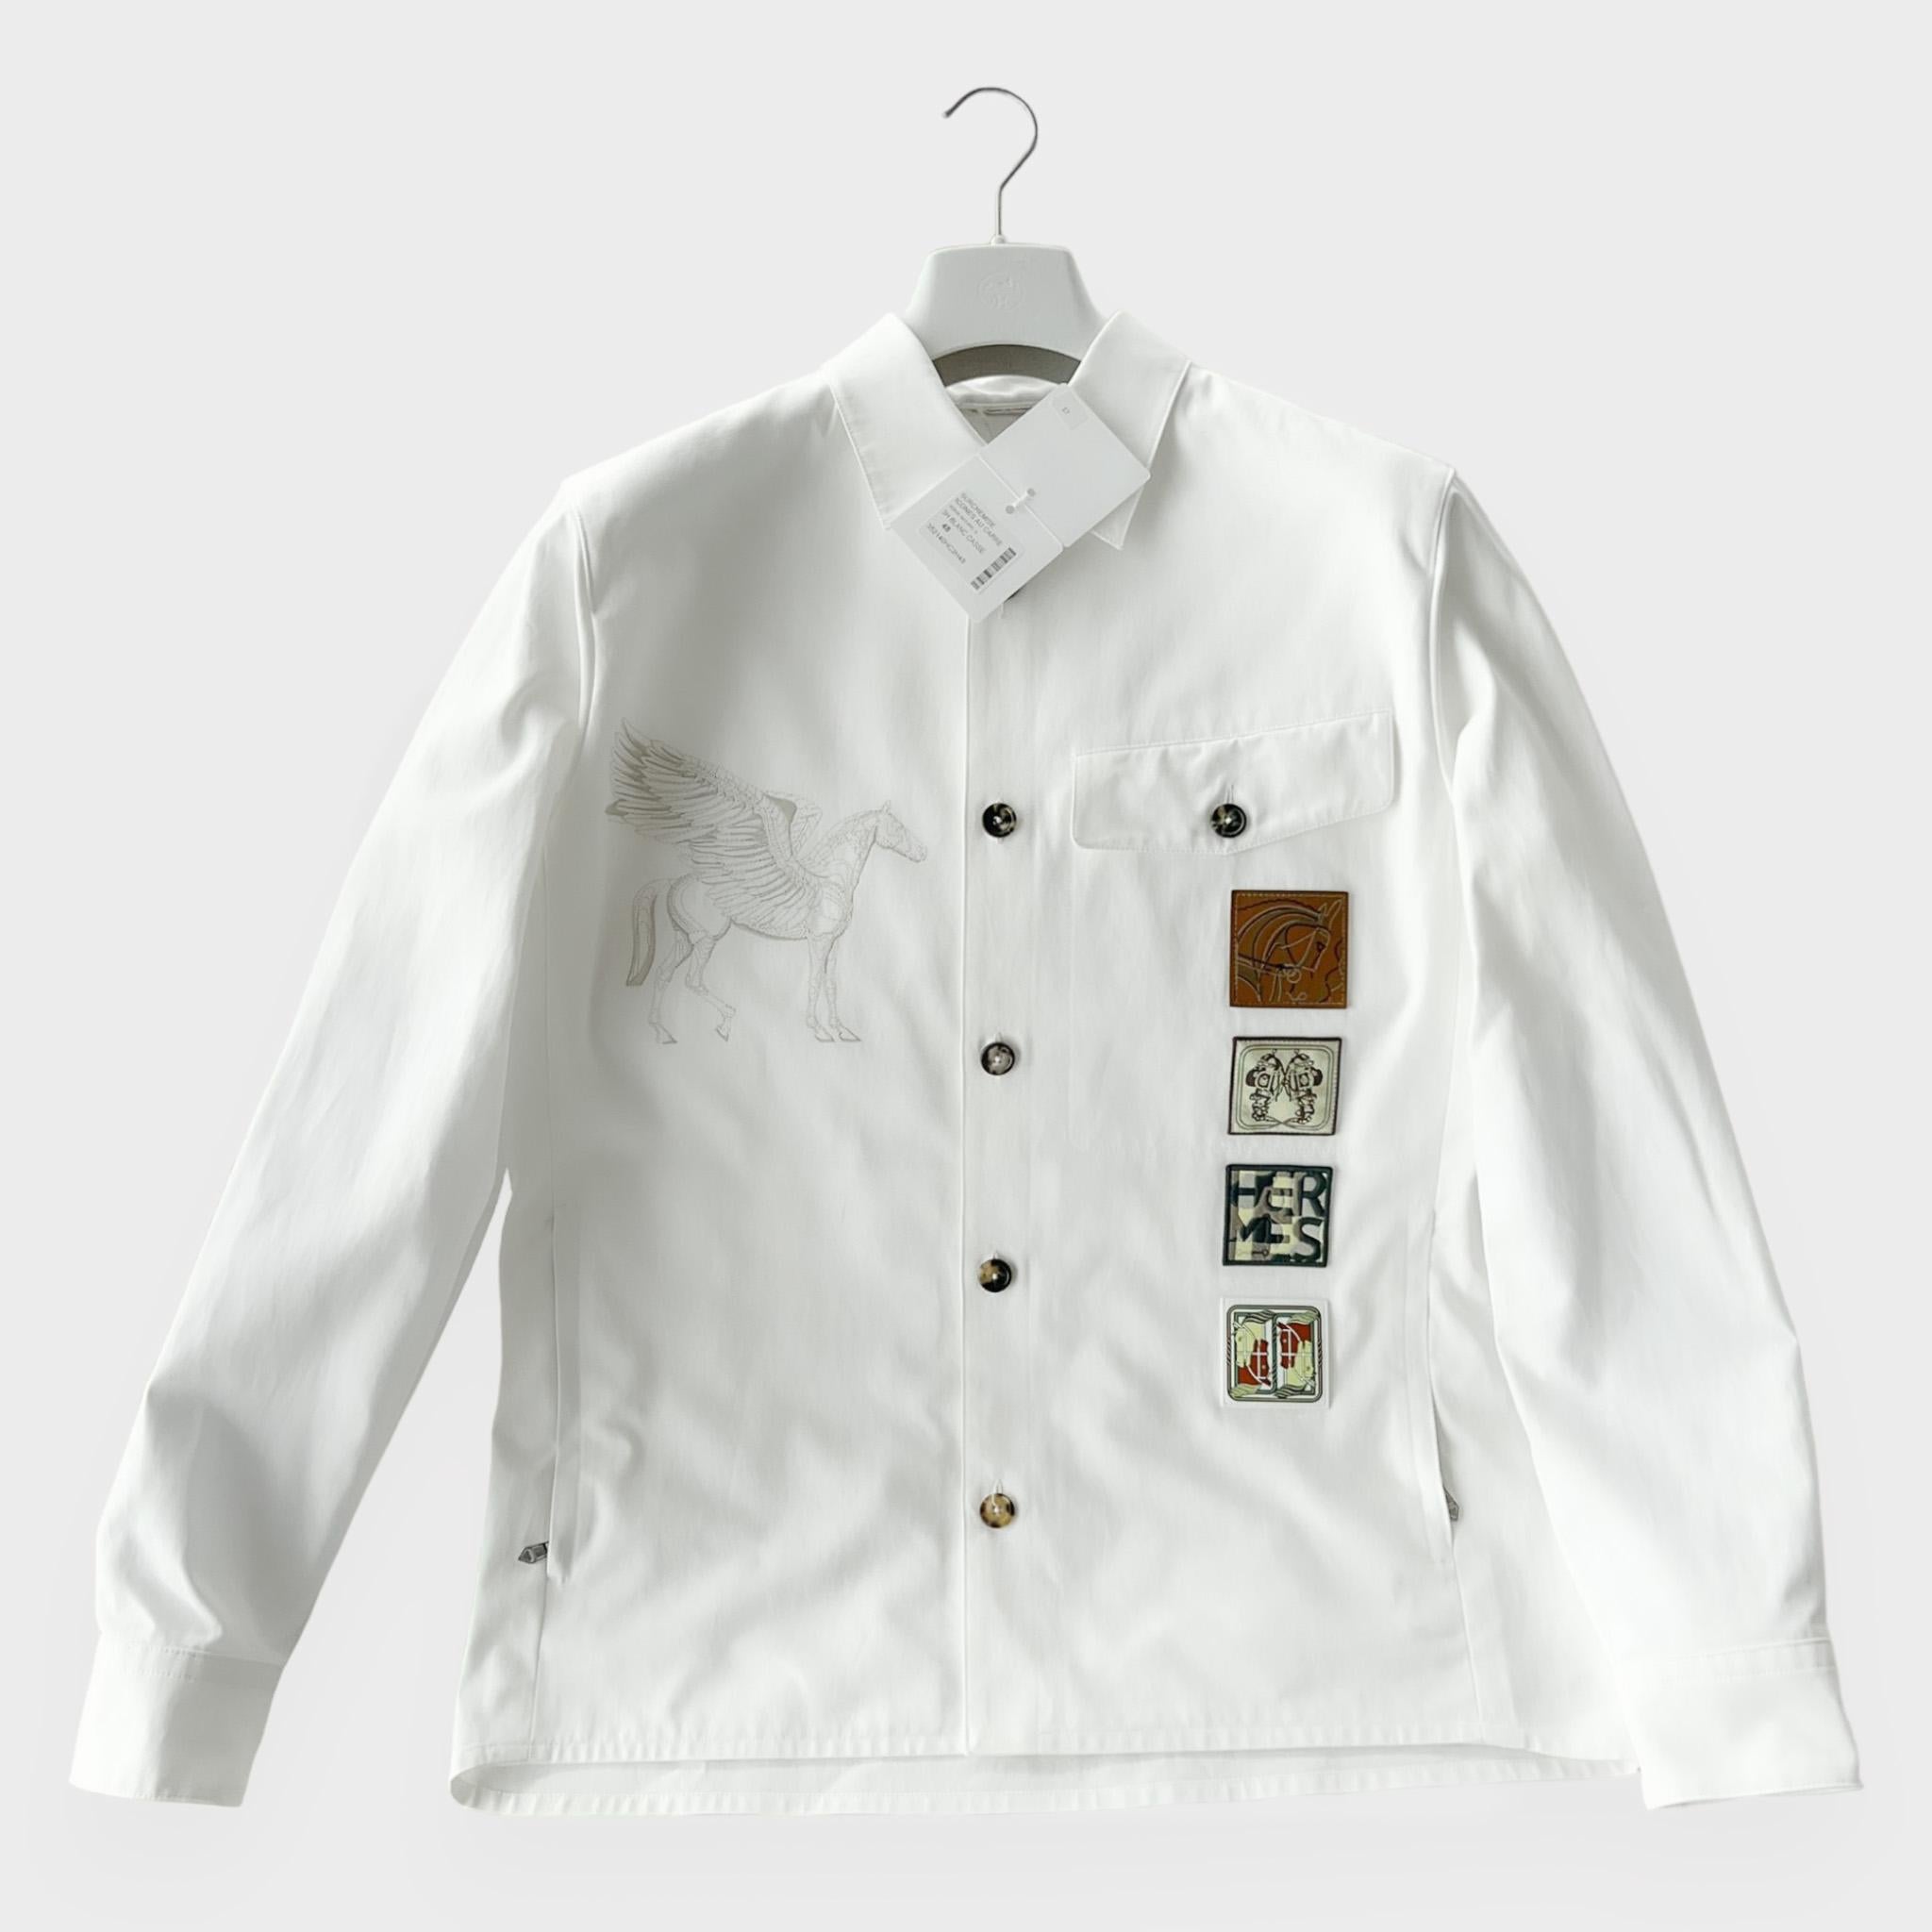 Hermès Men's 'Icones au Carre' Overshirt, White, 48 EU, Medium UK For Sale 5